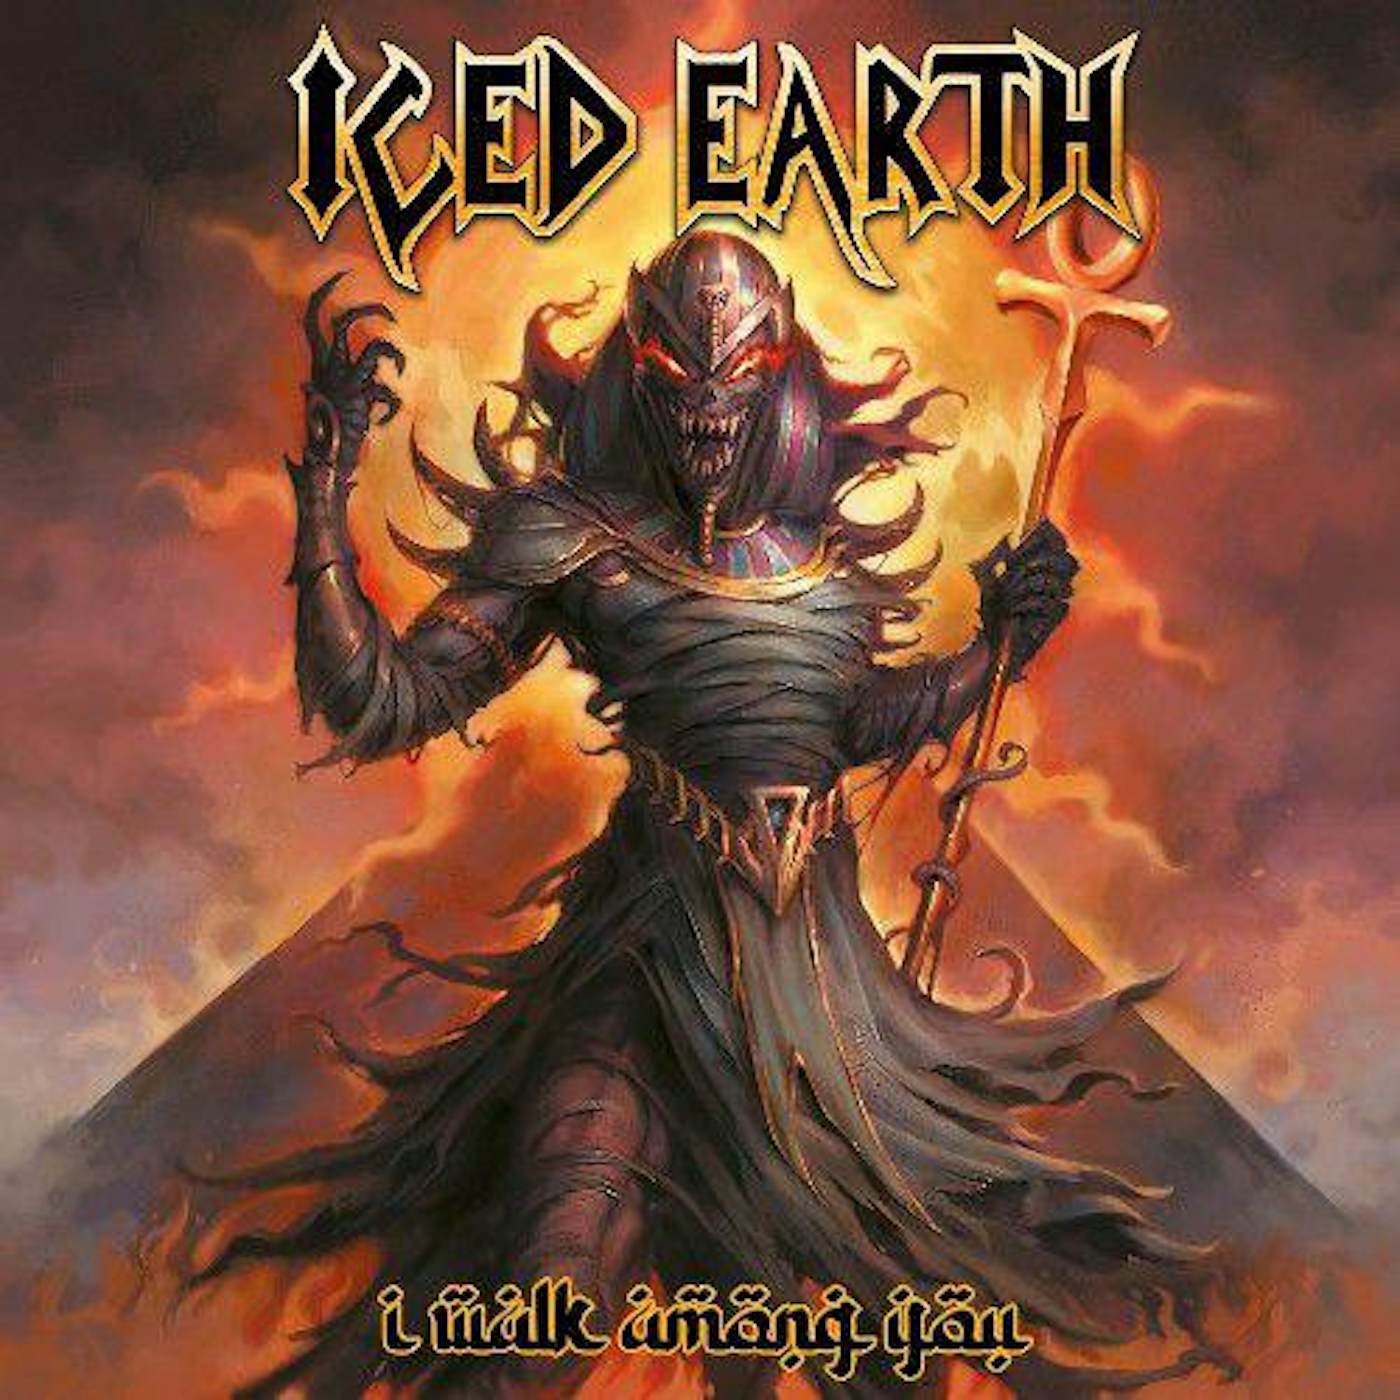 Iced Earth Walk Among You - Brick Red/Yellow/Orange Vinyl Record